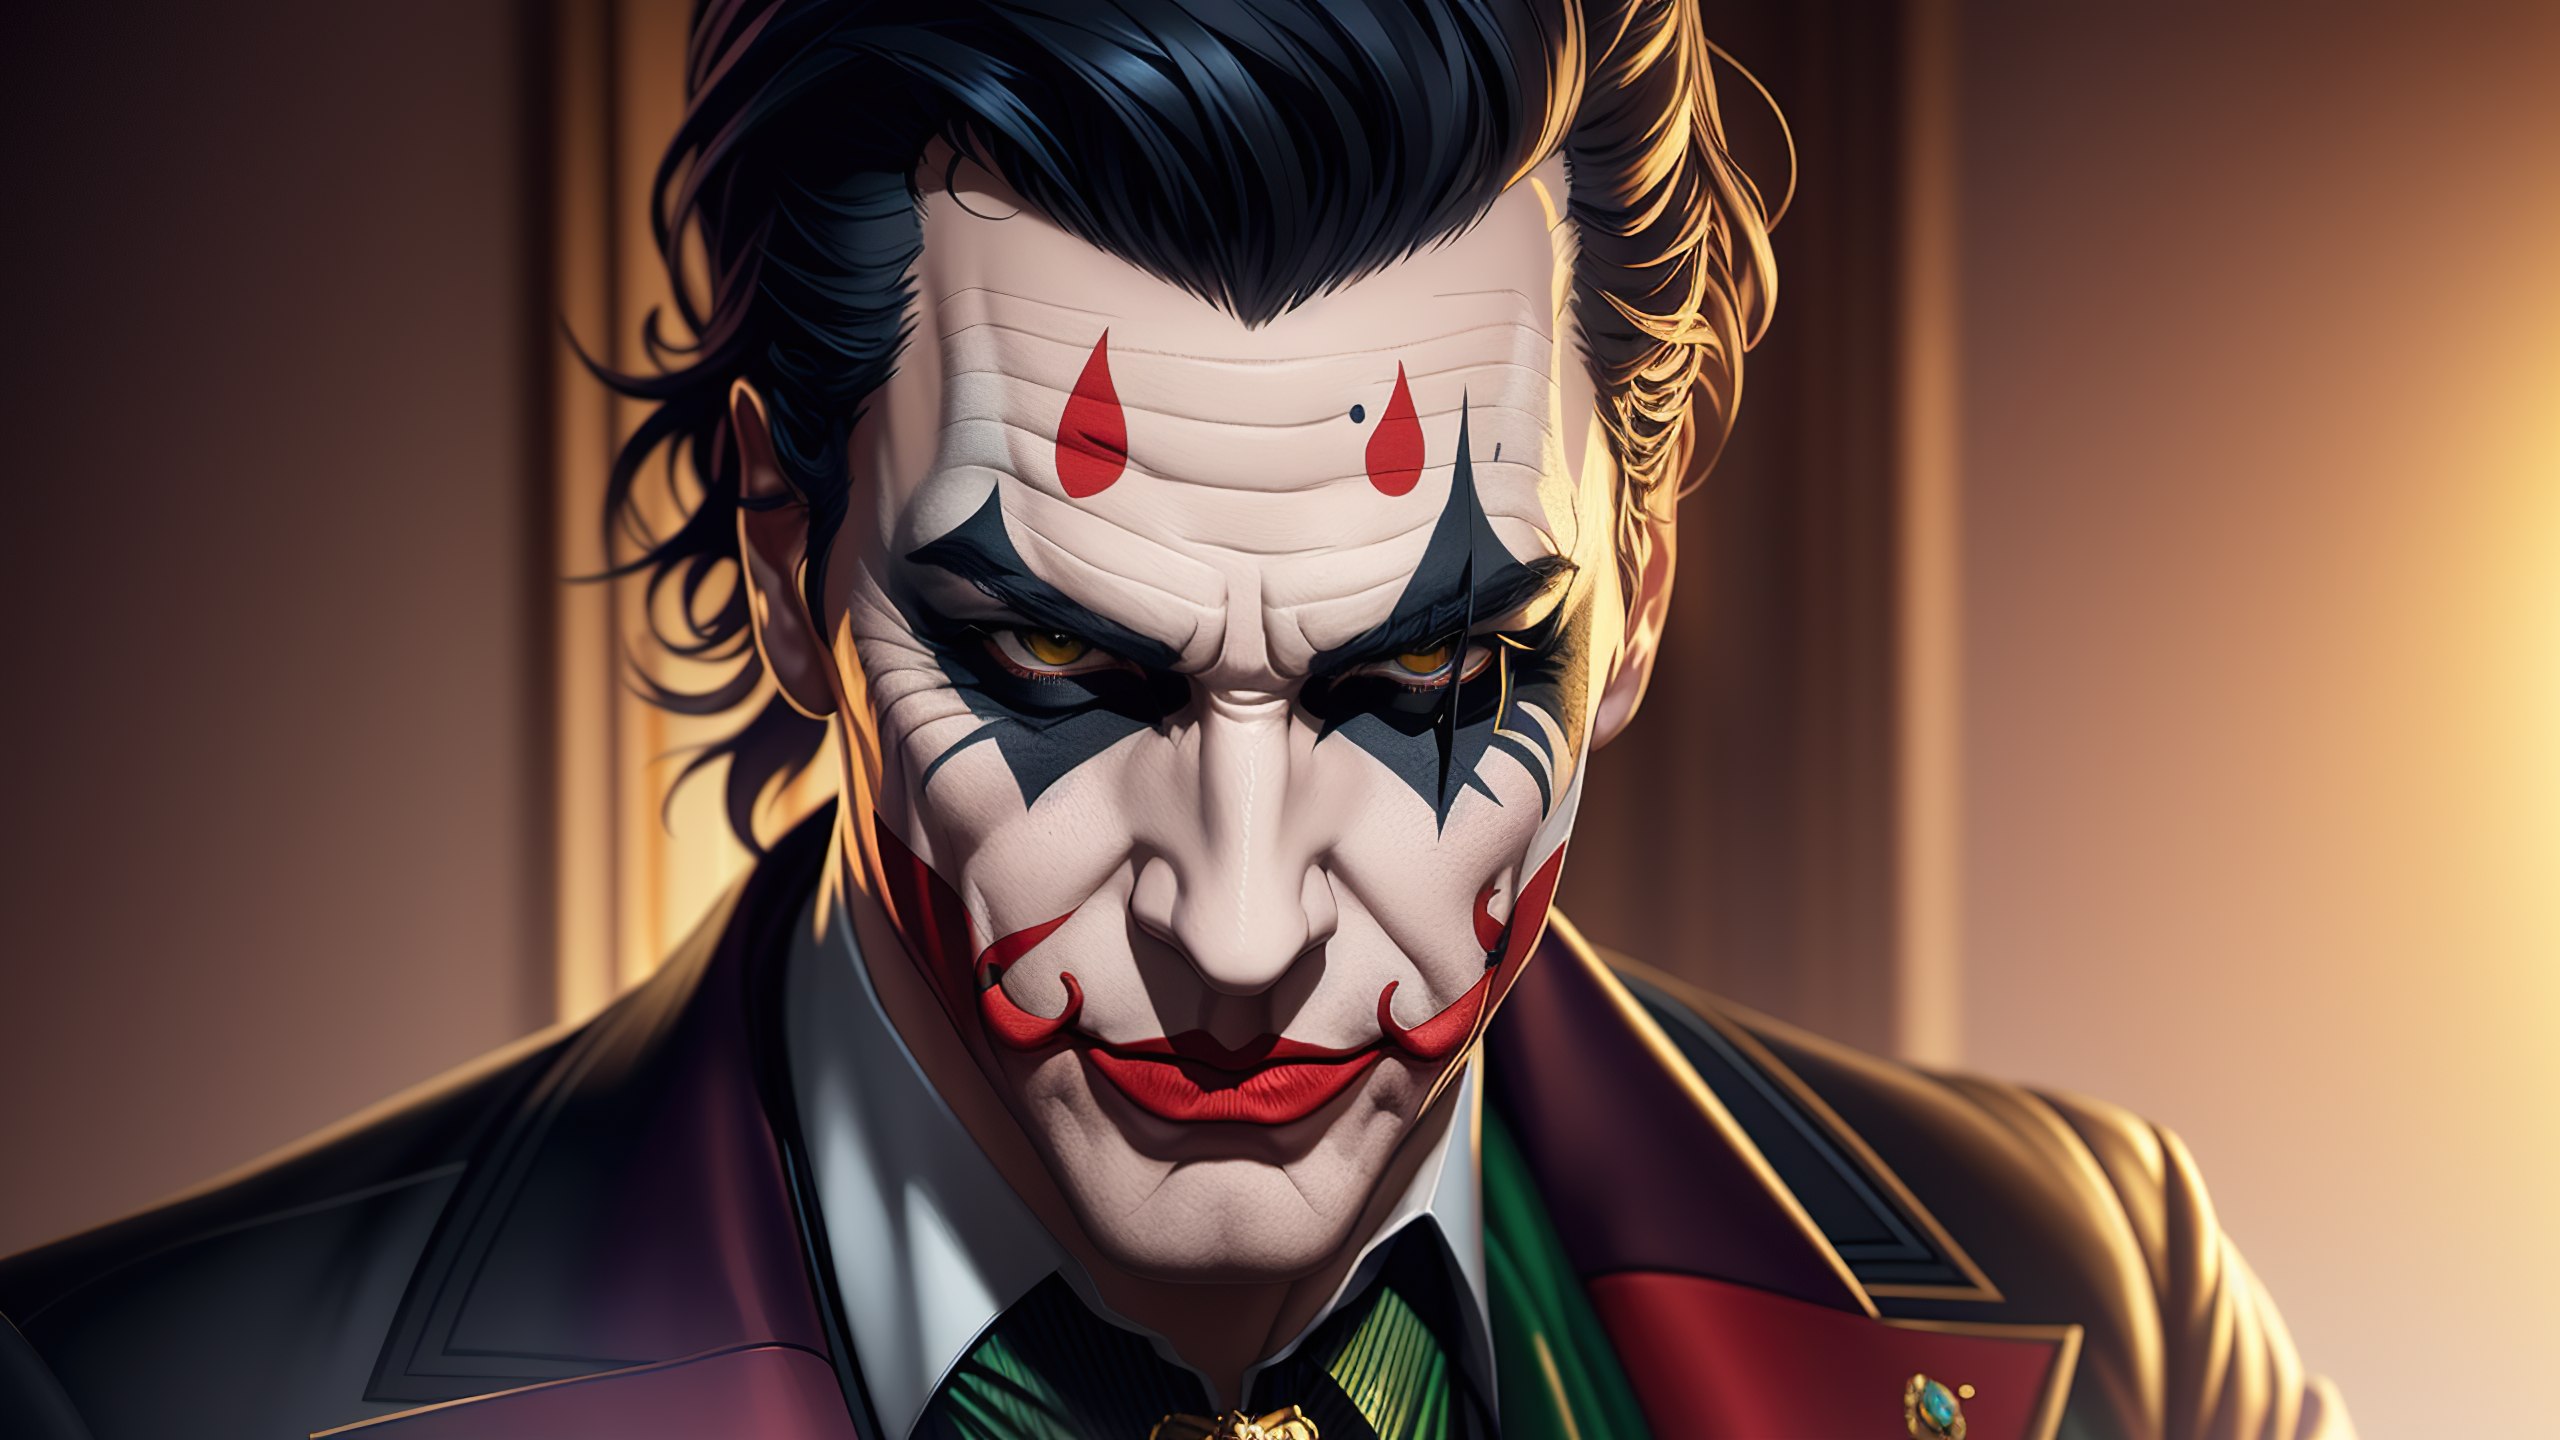 Joker by Bullseye